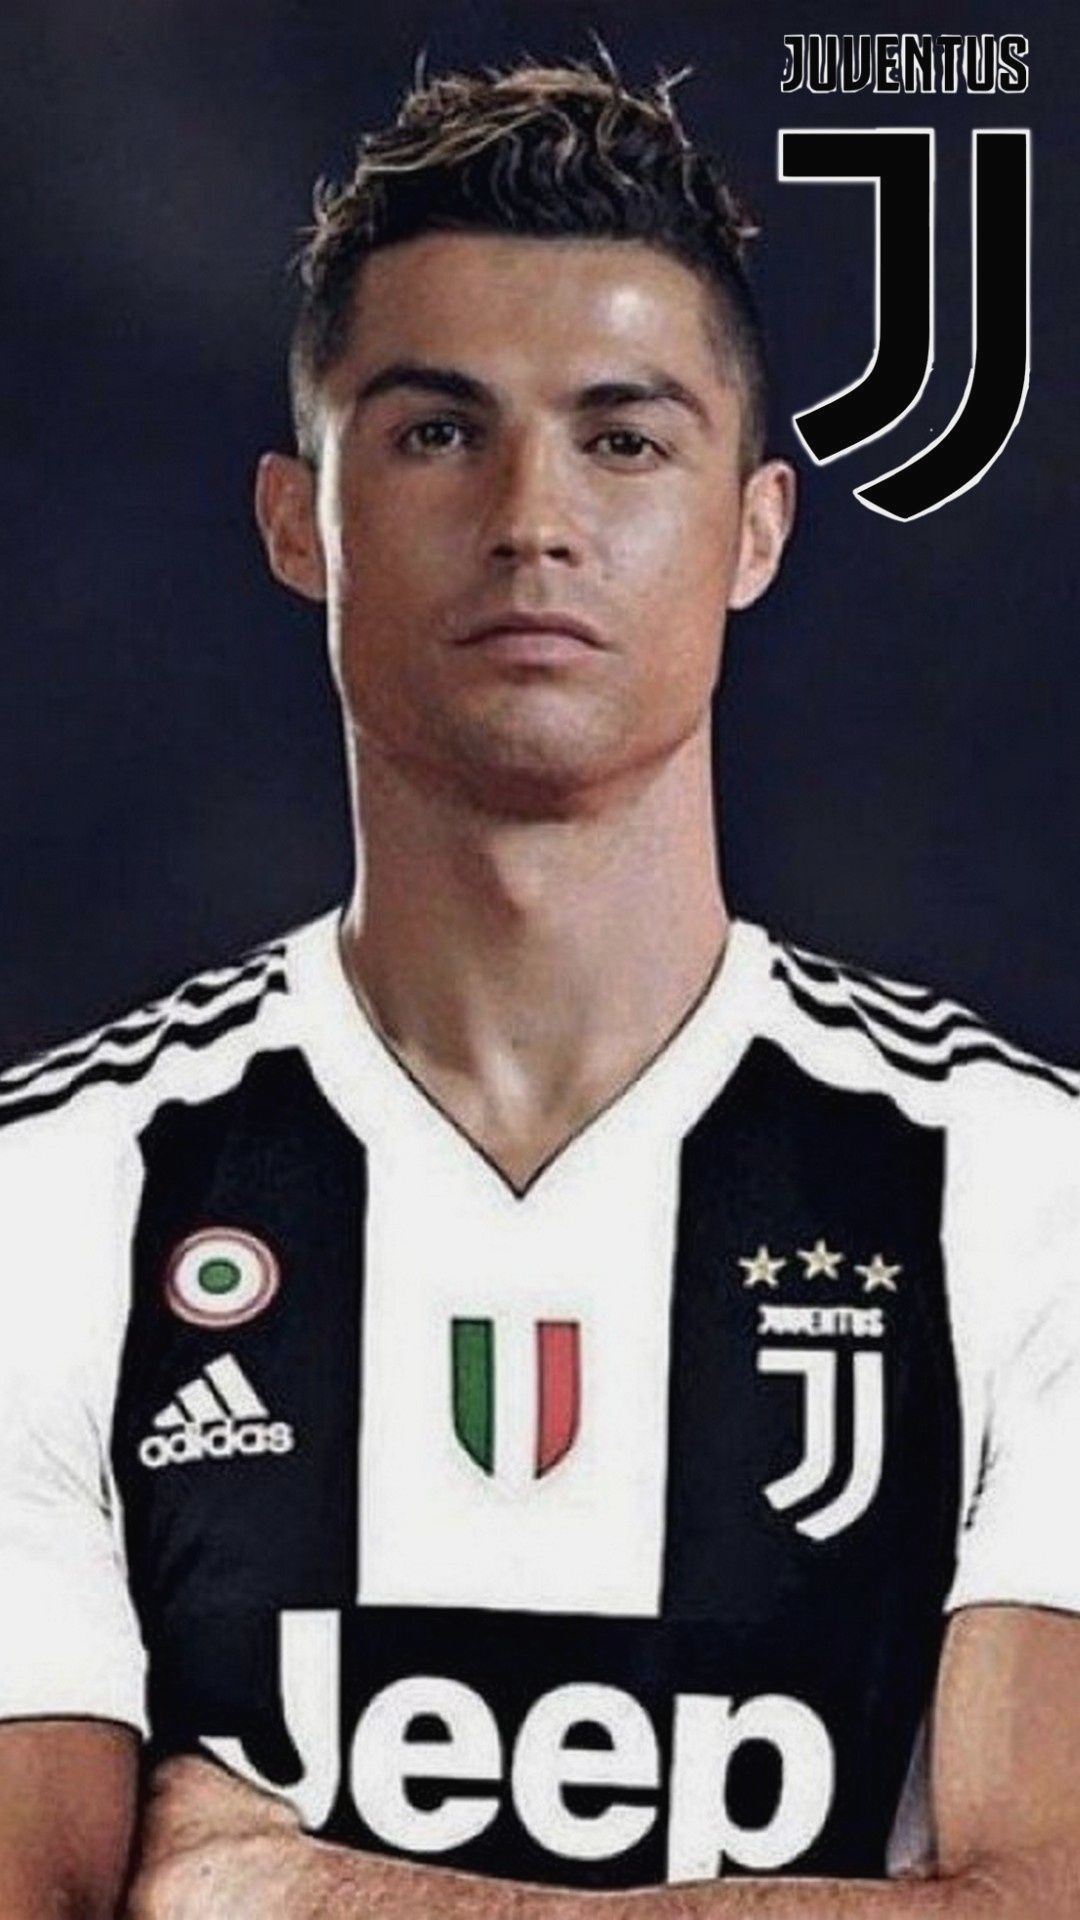 Ronaldo Juventus Wallpaper Iphone , HD Wallpaper & Backgrounds